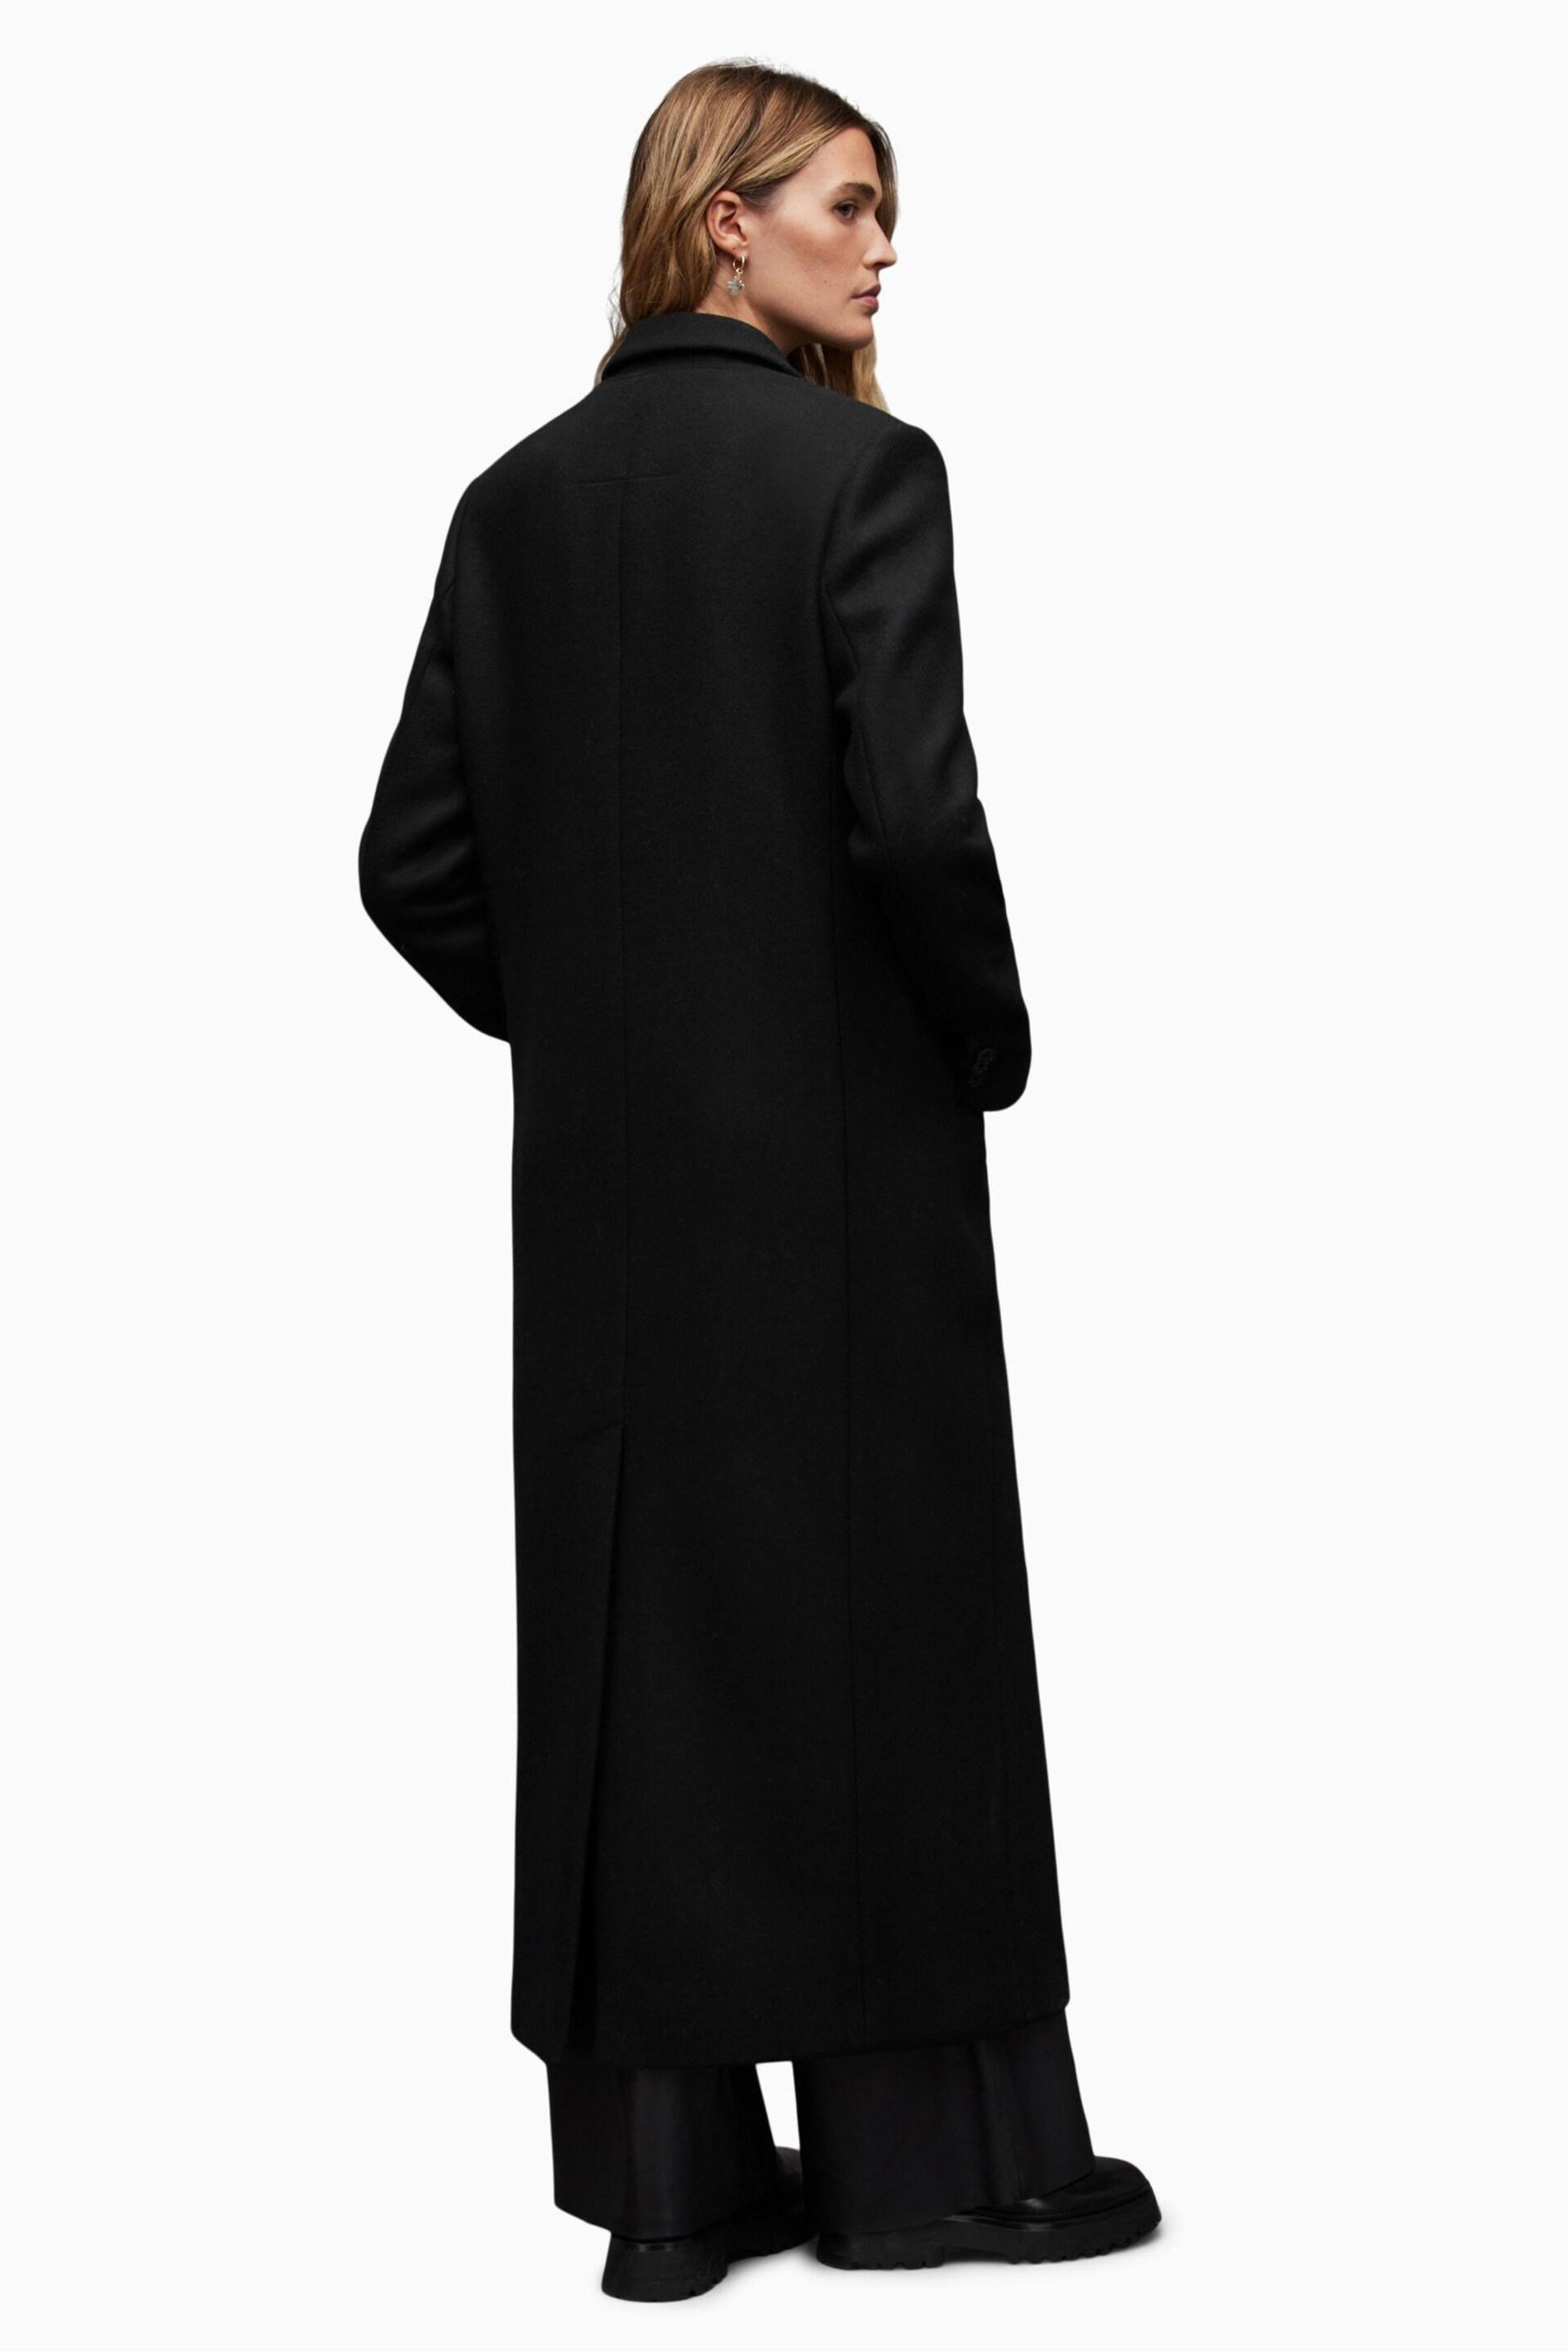 AllSaints Black Ellen Coat - Image 2 of 7